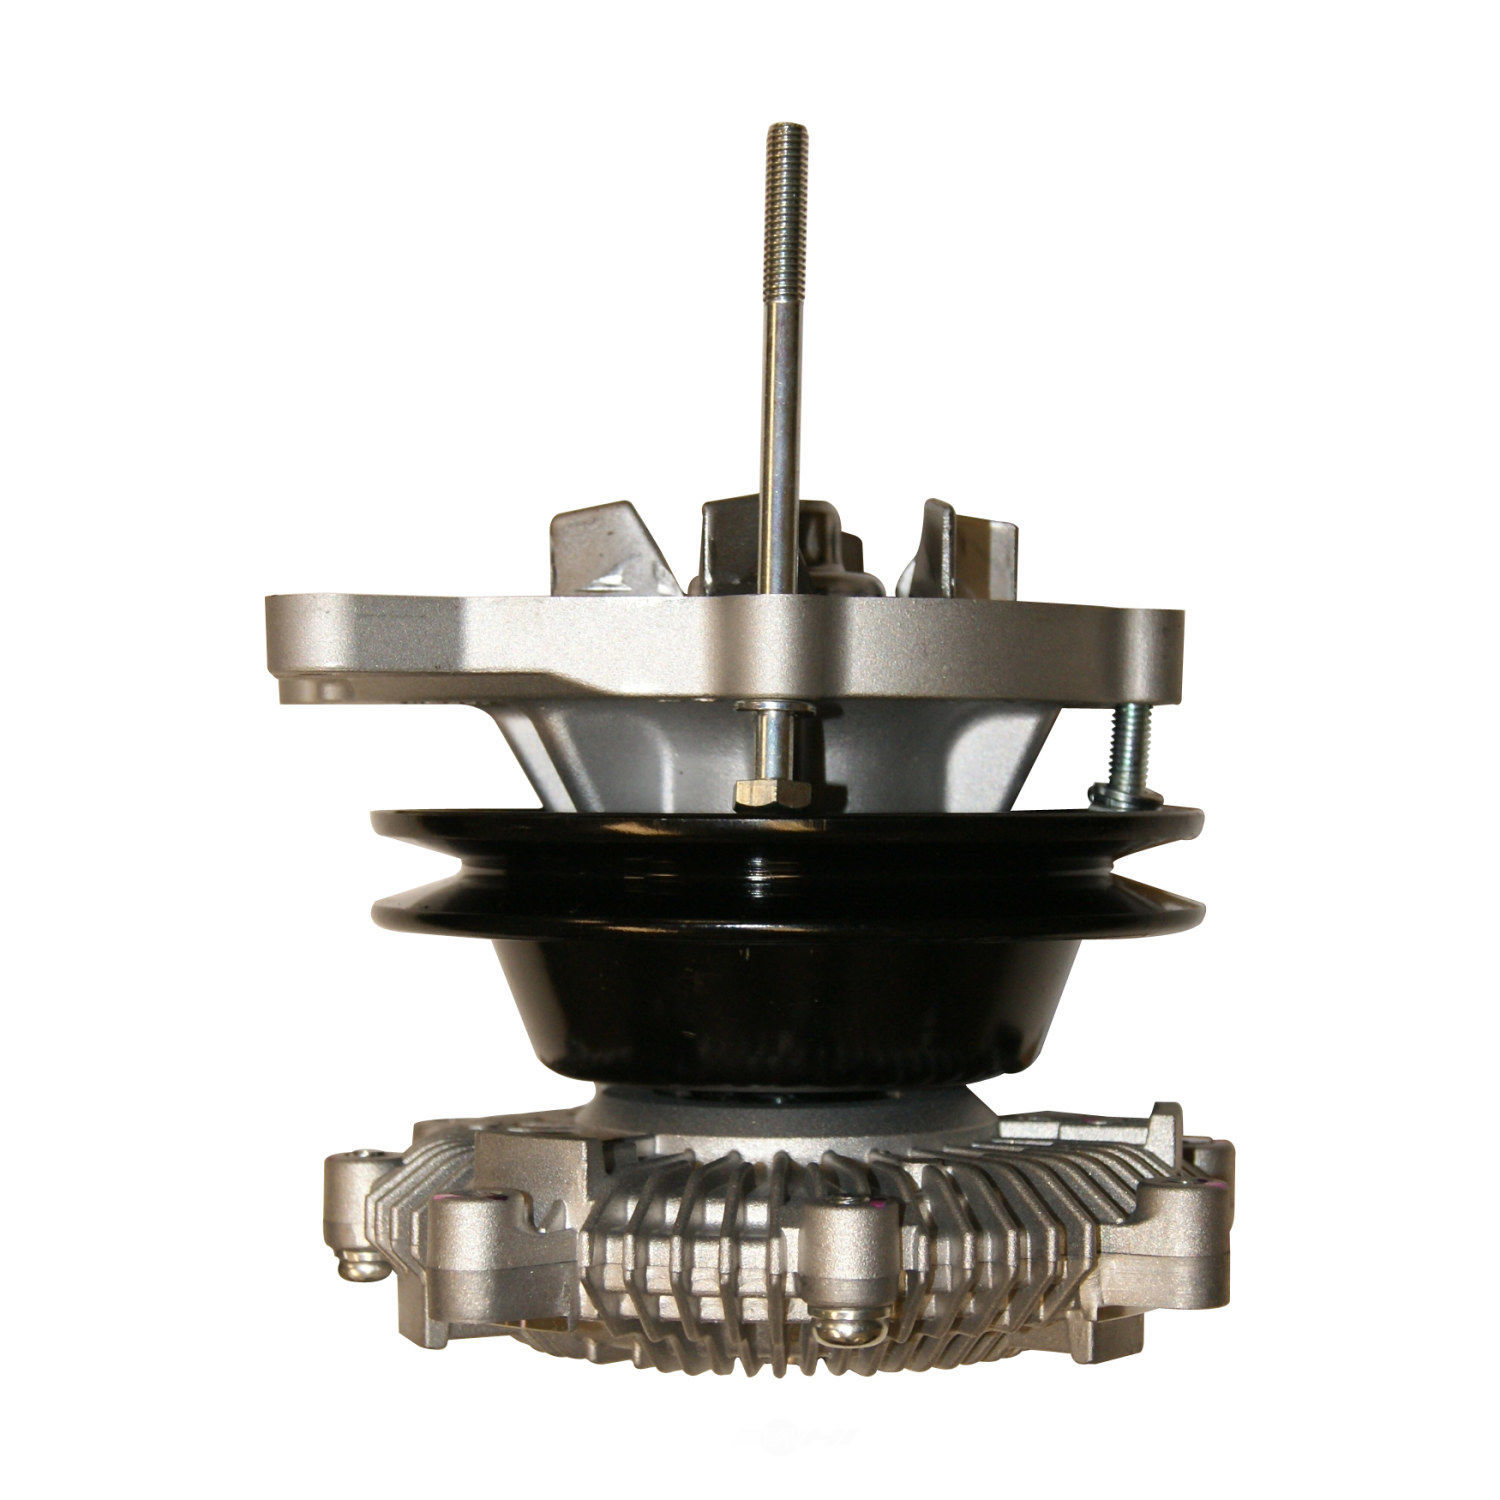 GMB - Engine Water Pump - GMB 150-1173